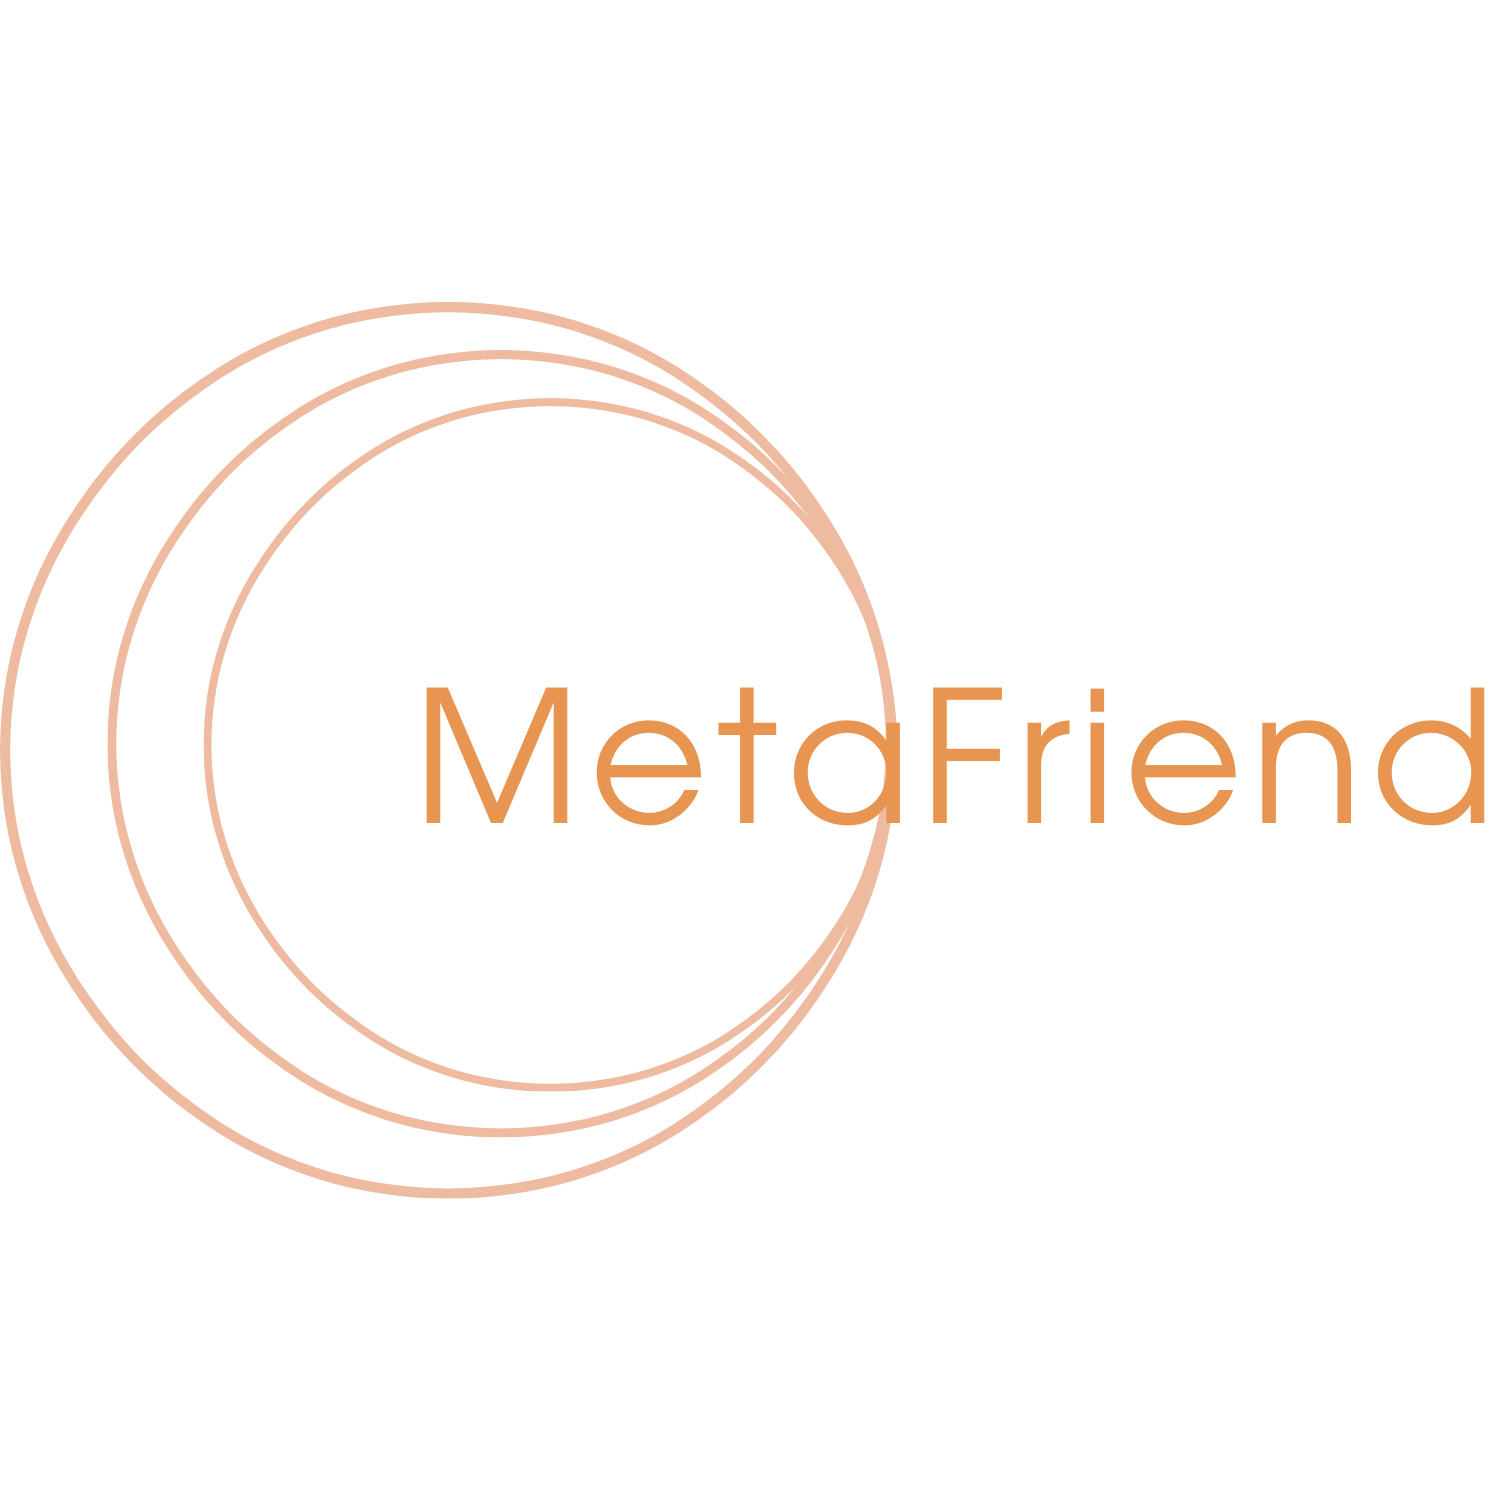 MetaFriend logotype